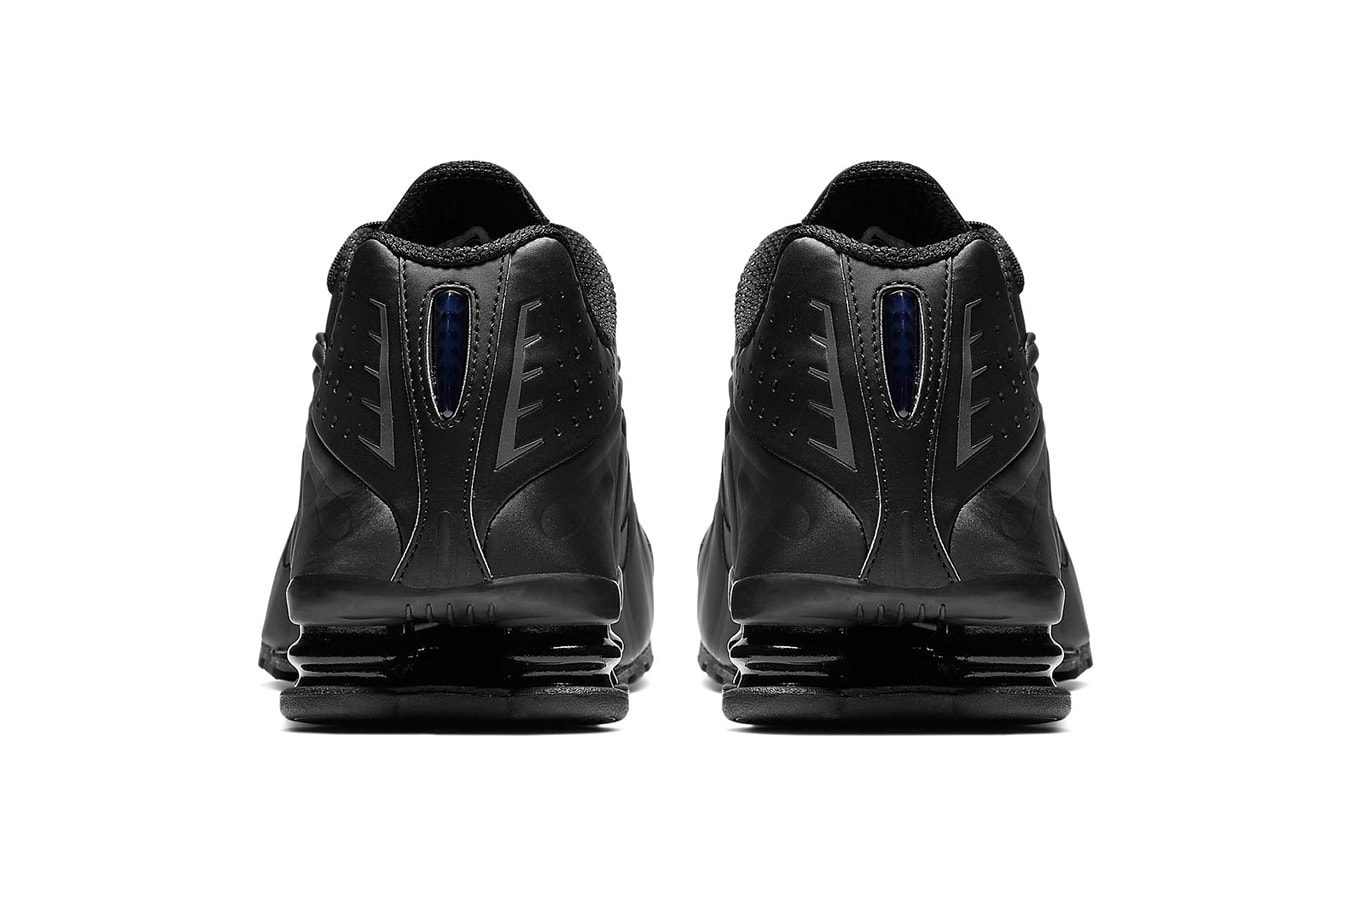 Nike Shox R4 "Triple Black" Release Info pricing stockist date web store BV1111-001 